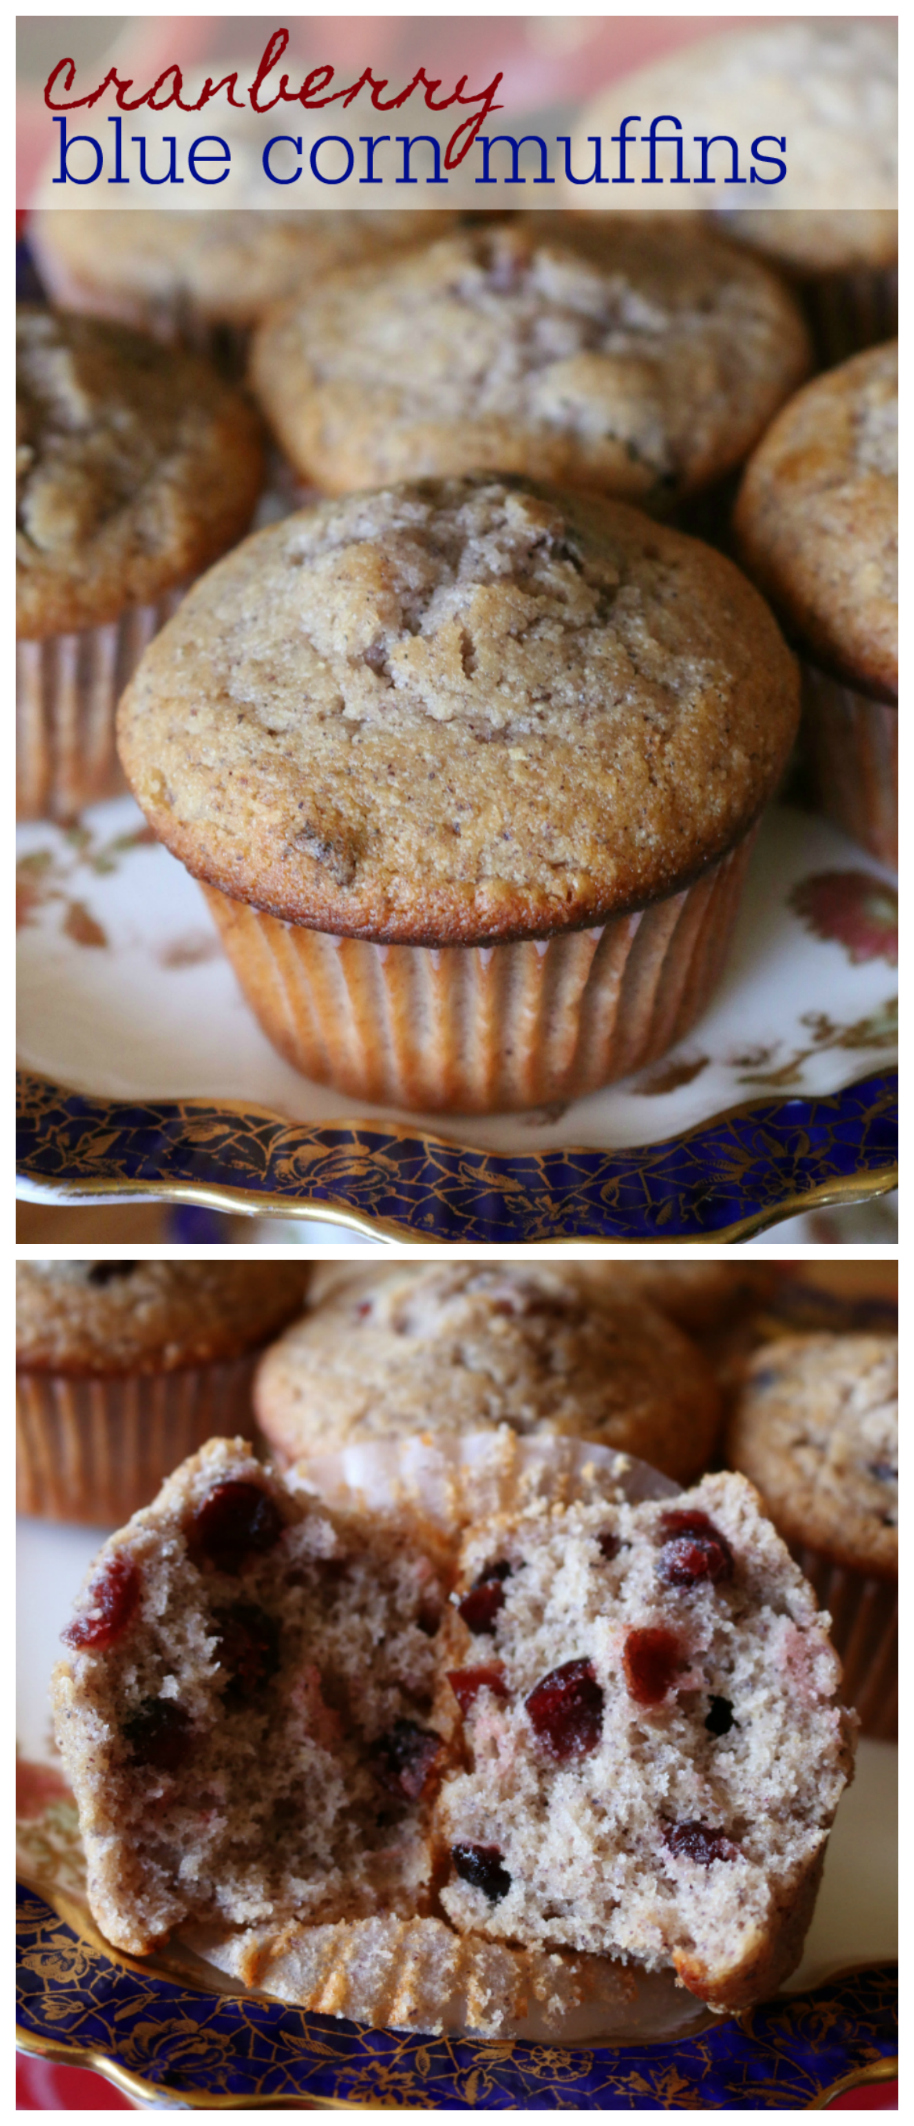 A Cranberry Blue Corn Breakfast Muffin Recipe | CeceliasGoodStuff.com | Good Food for Good People